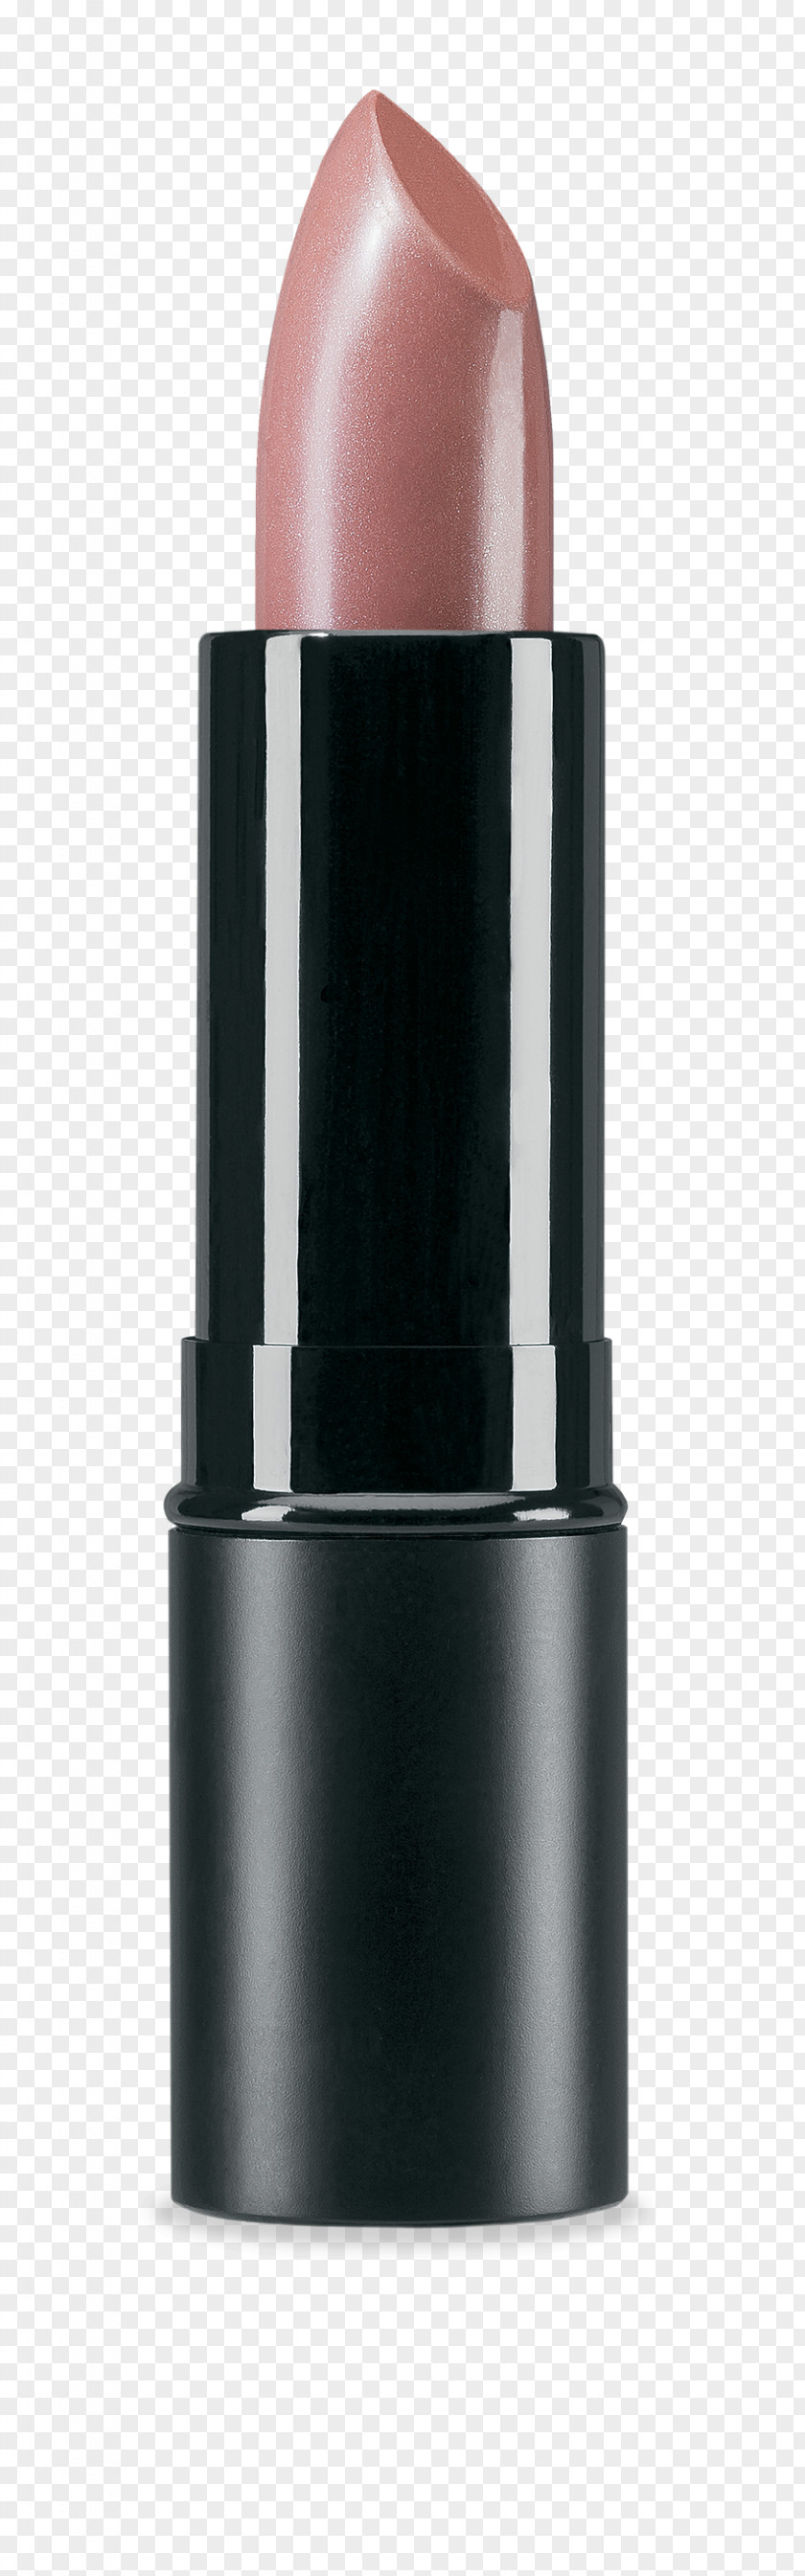 Lipstick Mineral Cosmetics Color PNG